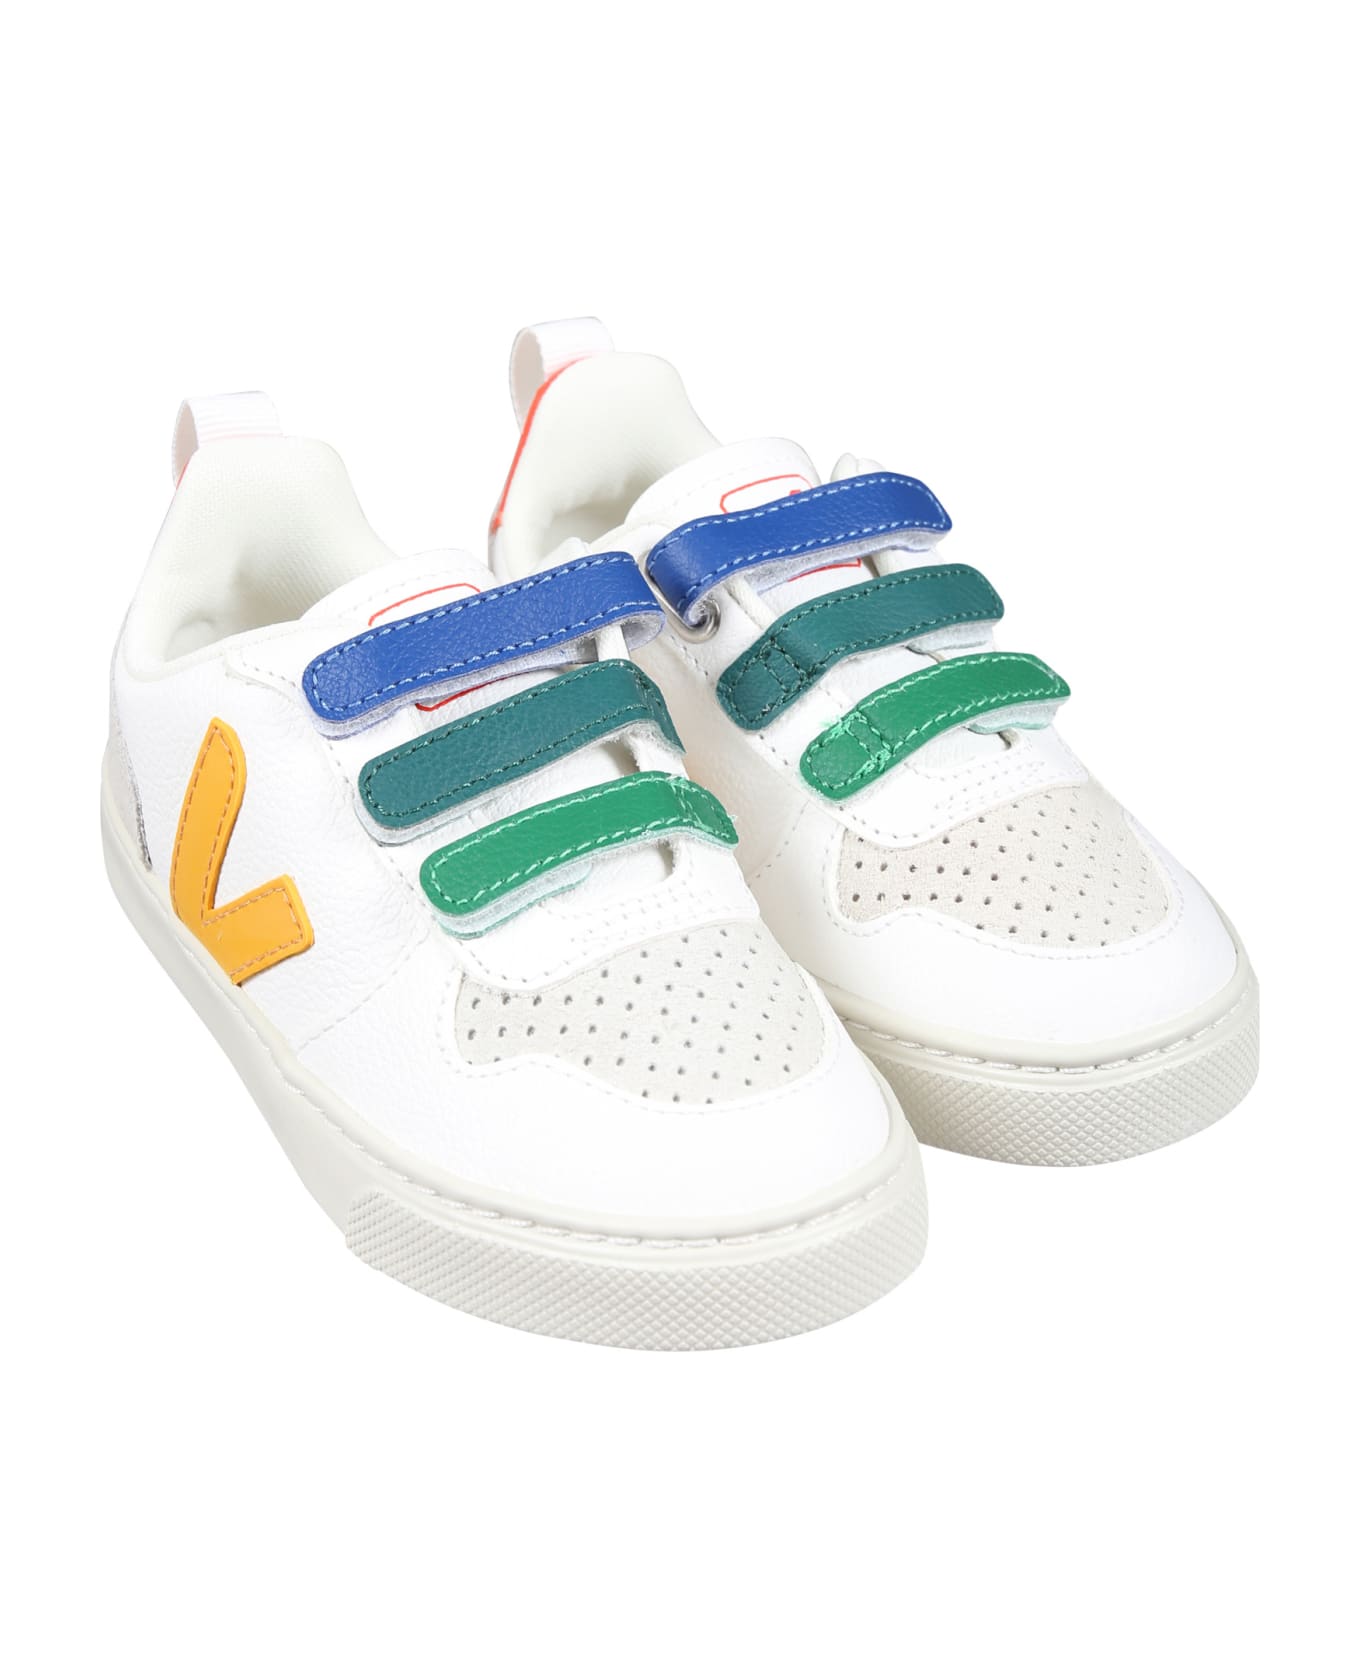 Veja White Sneakers For Kids With Logo - White シューズ